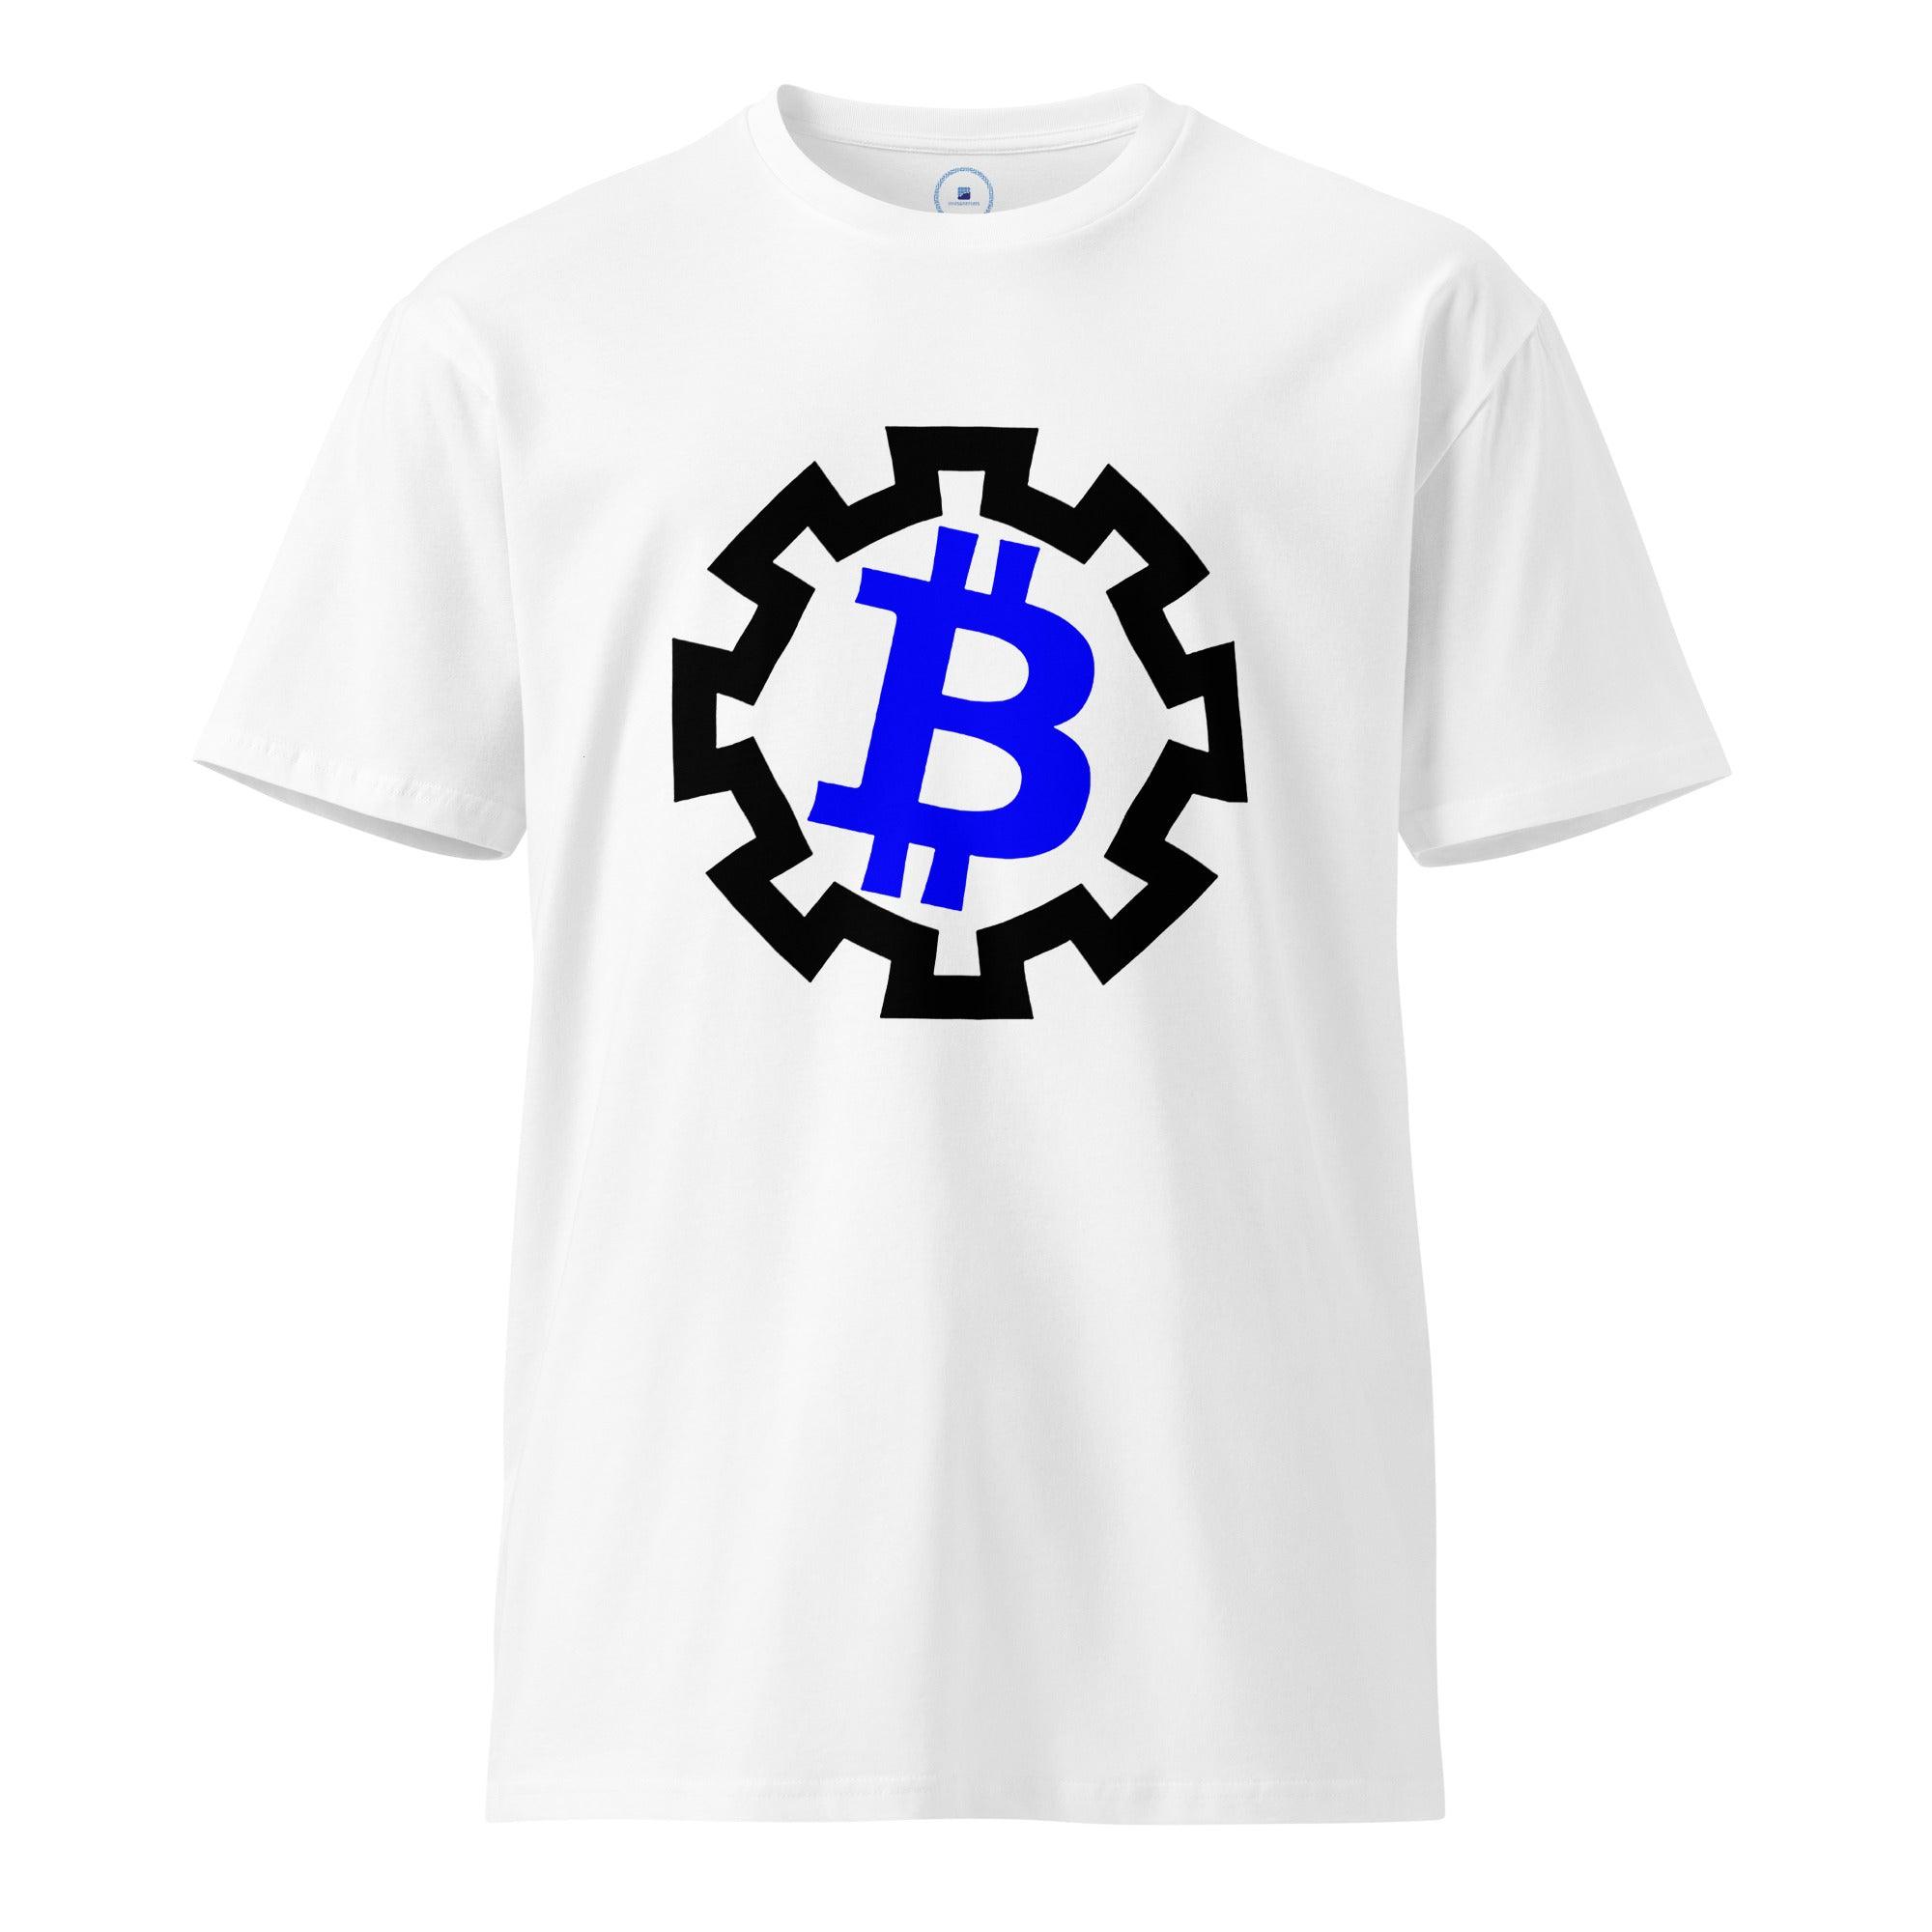 Bitcoin Gear Wheel T-Shirt - InvestmenTees